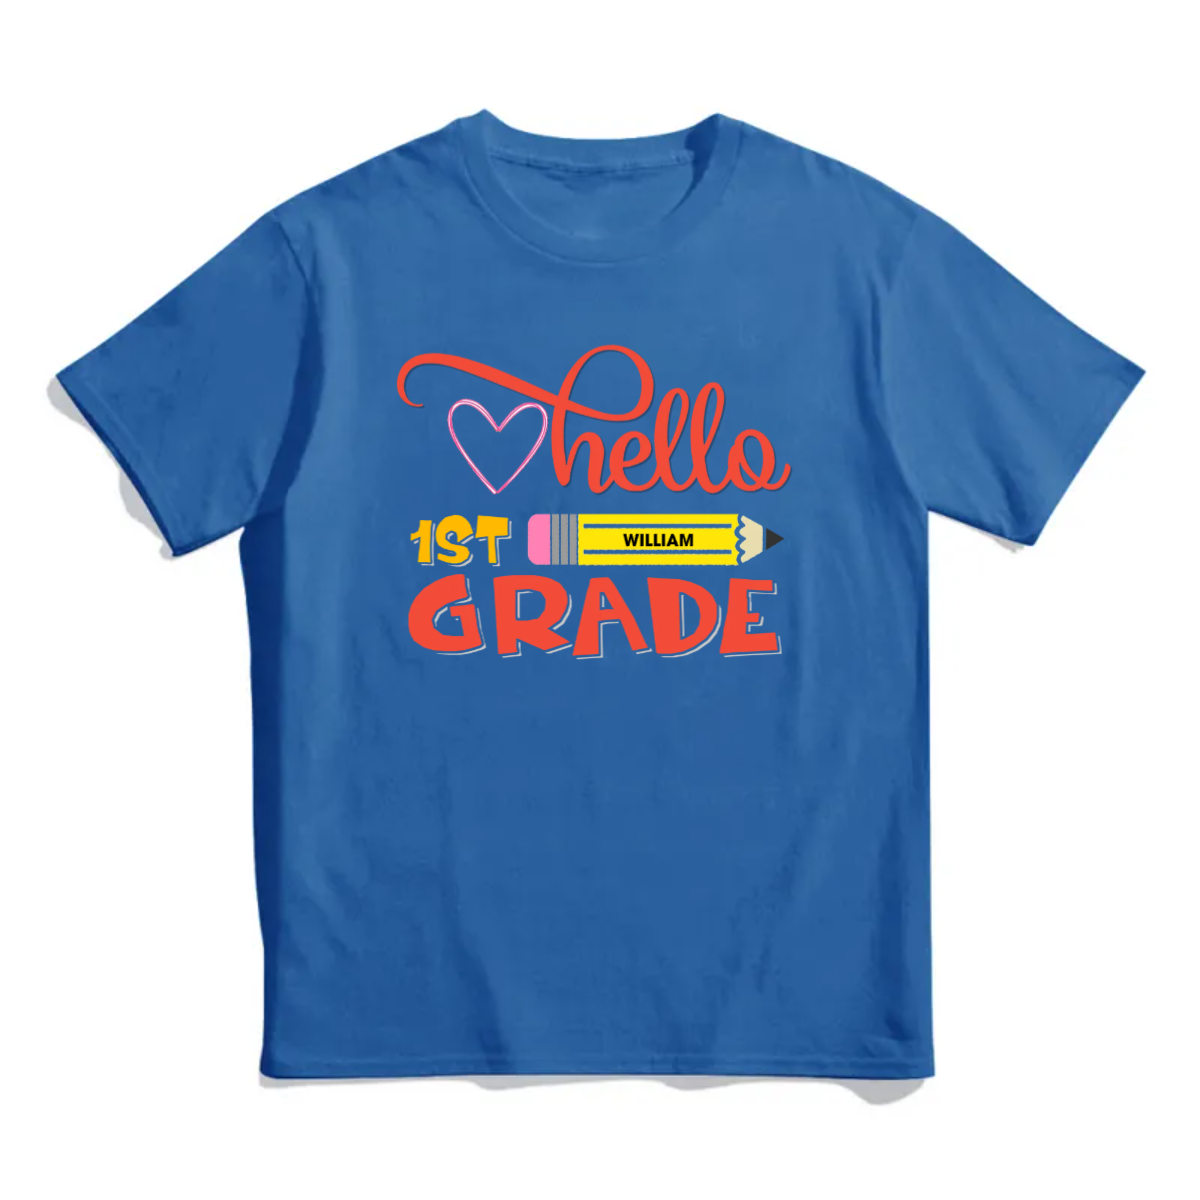 Hello School - Back To School Gift - Personalized Custom Children's T-shirt